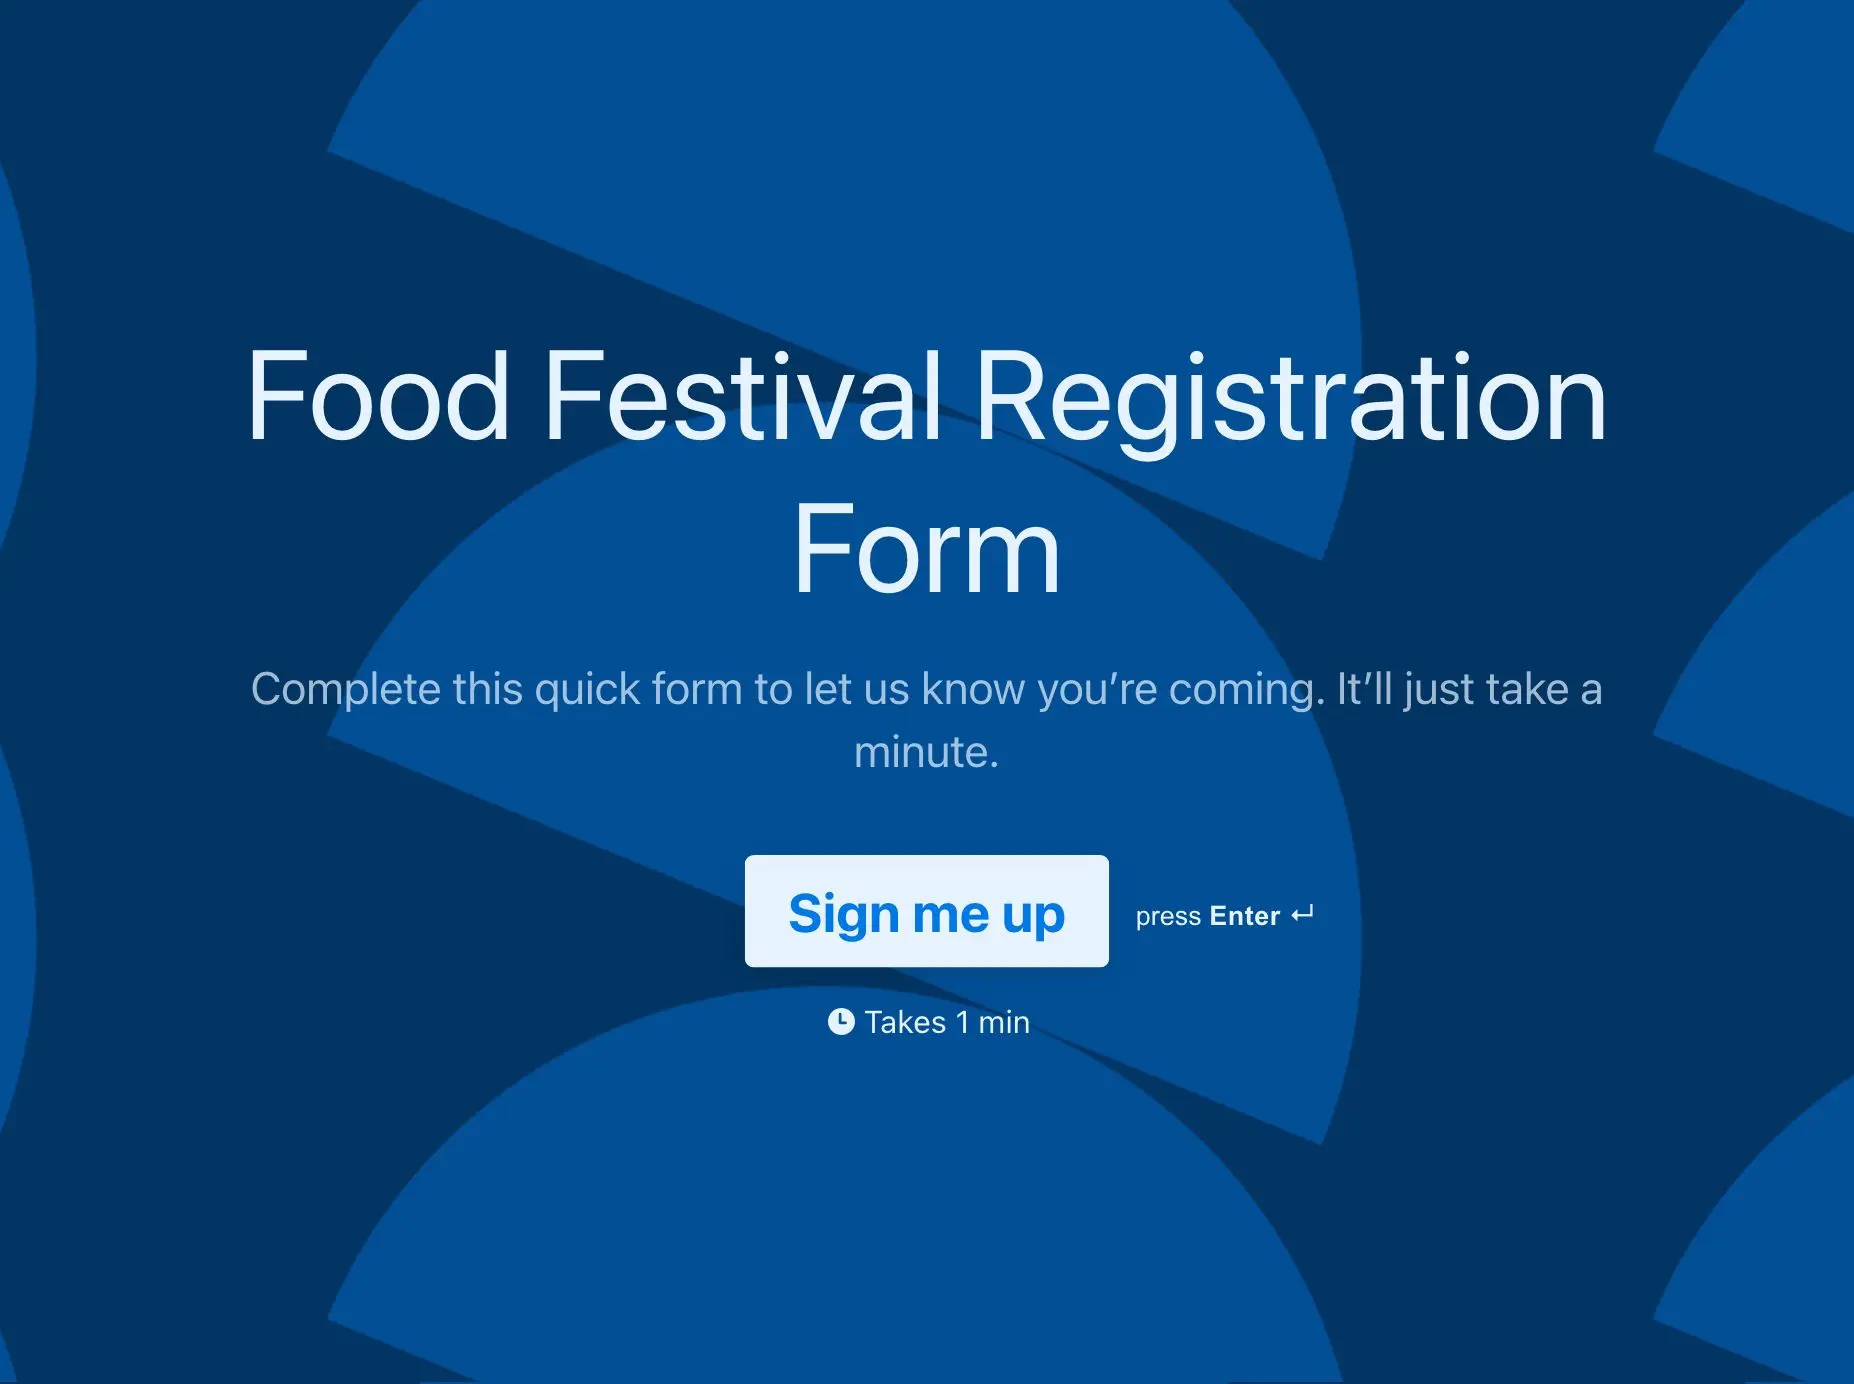 Food Festival Registration Form Template Hero